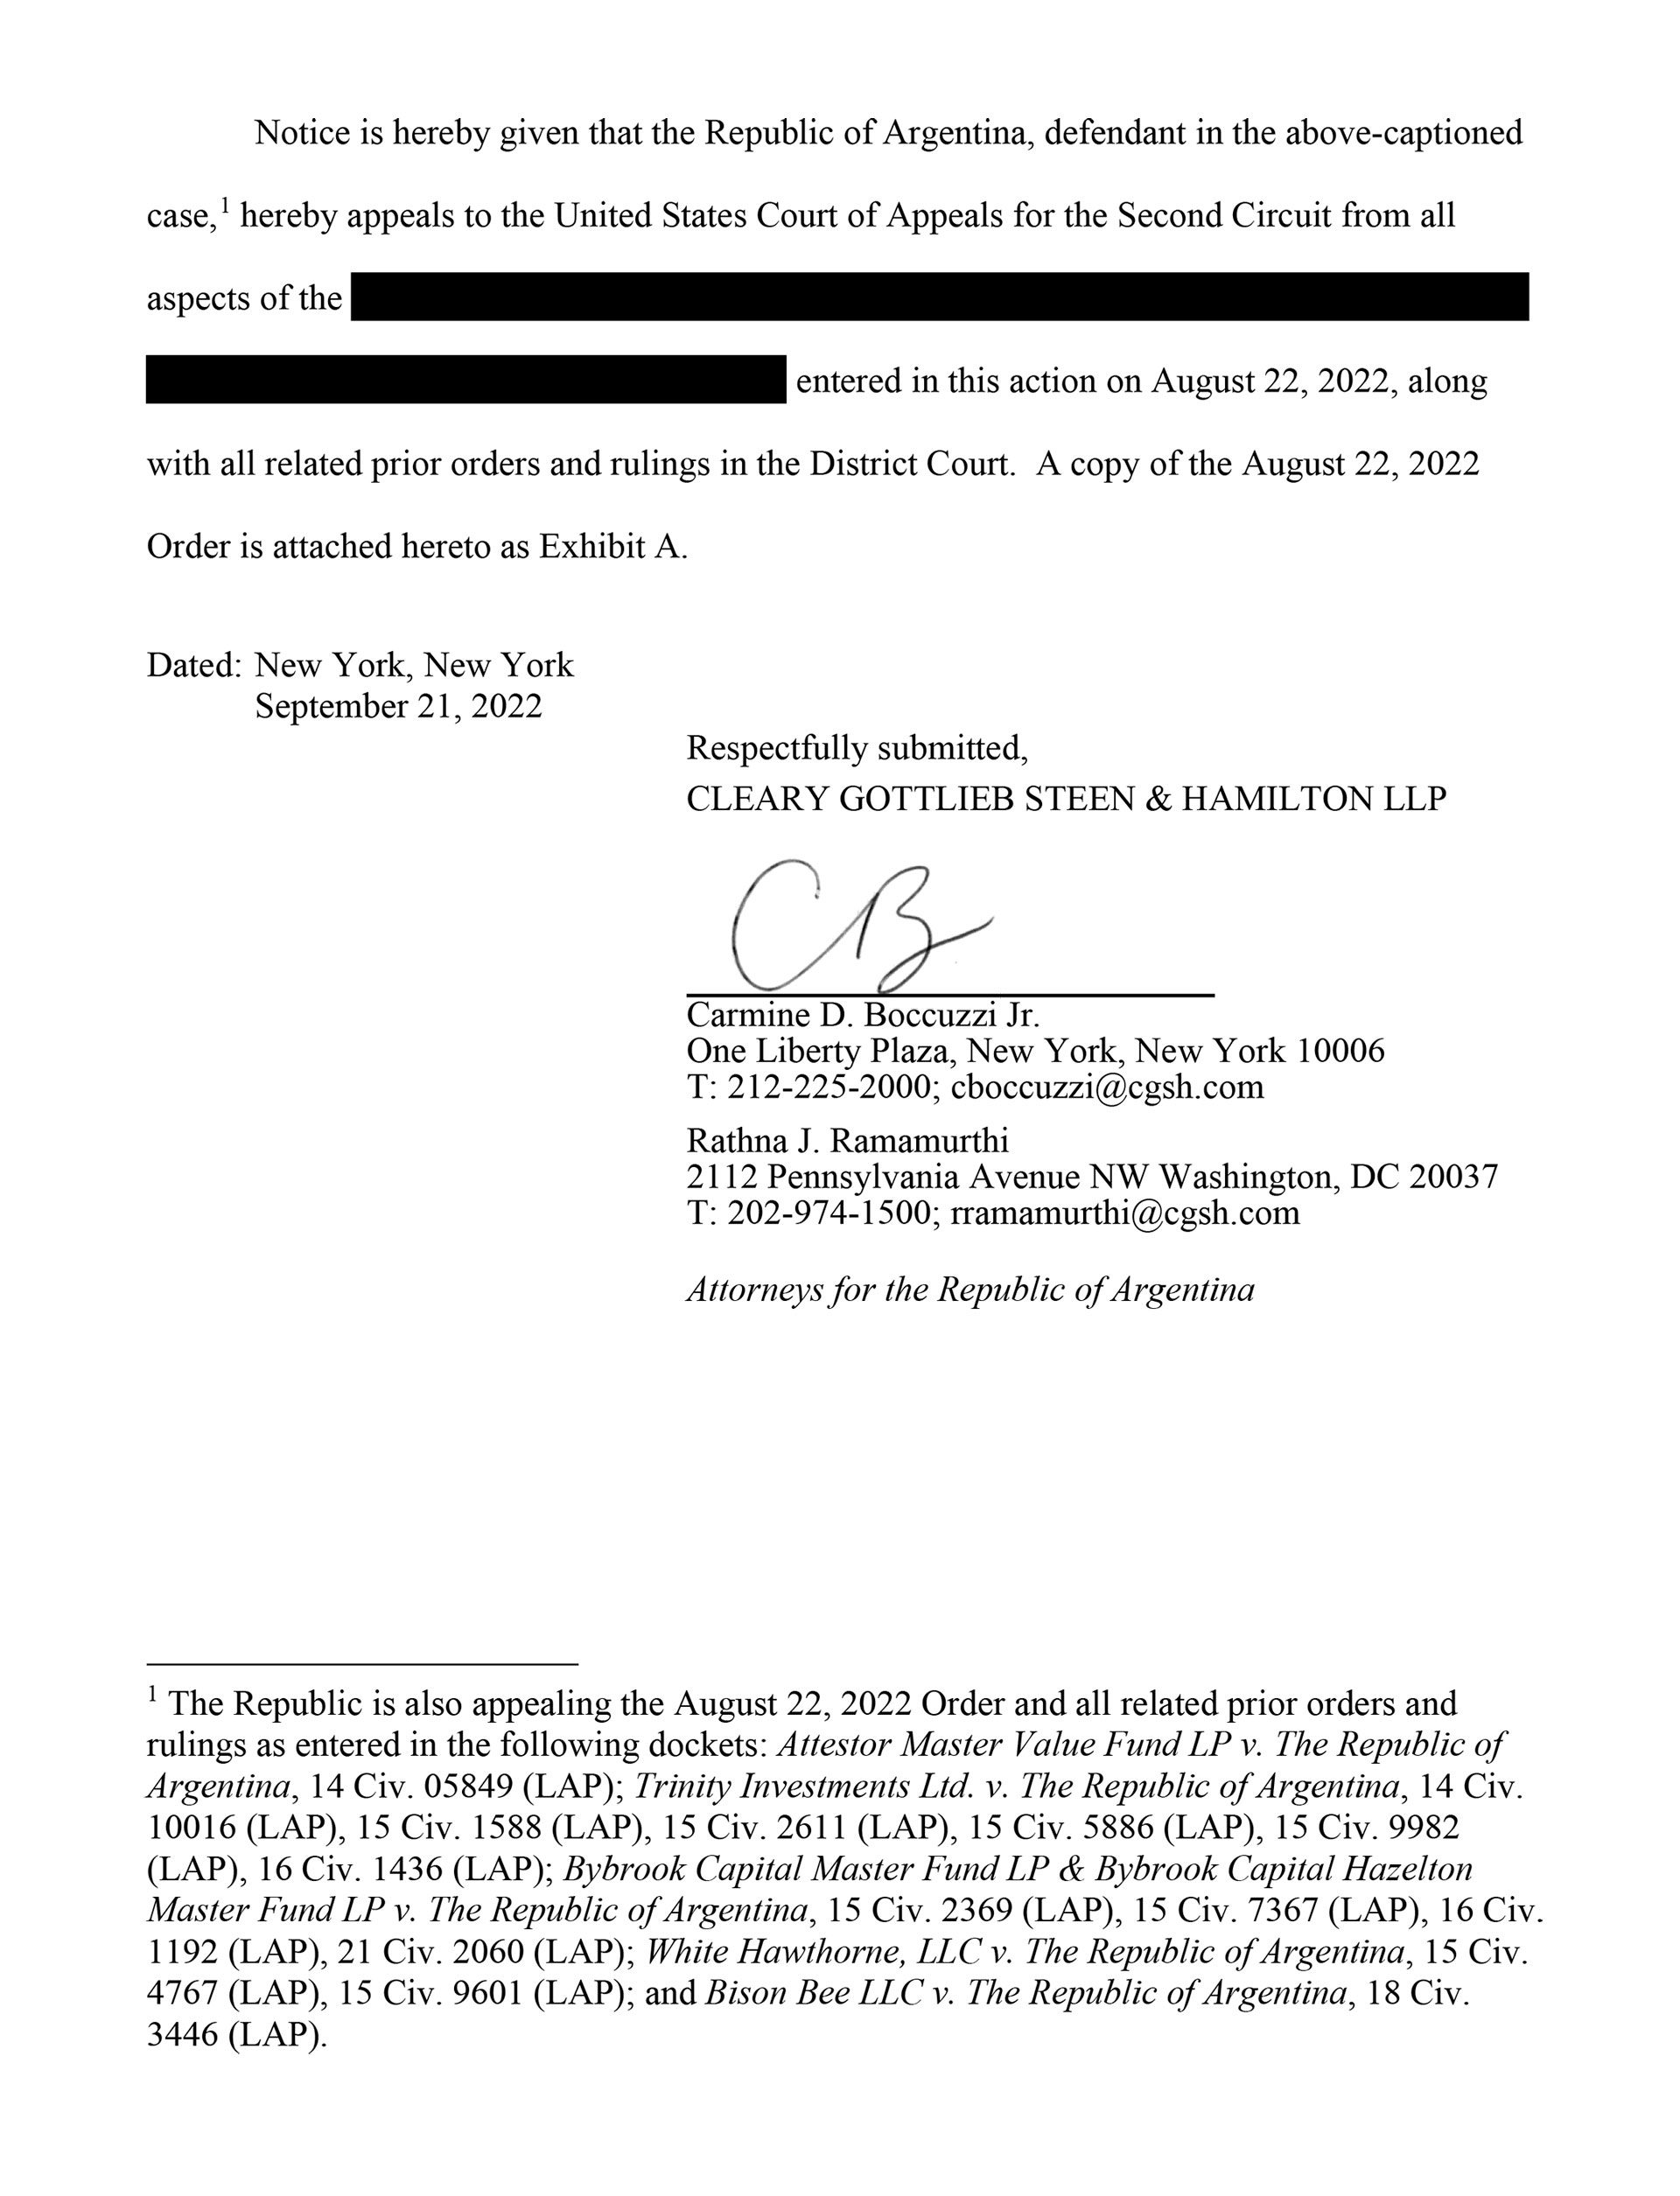 Appeal memorandum filed by Argentina in New York